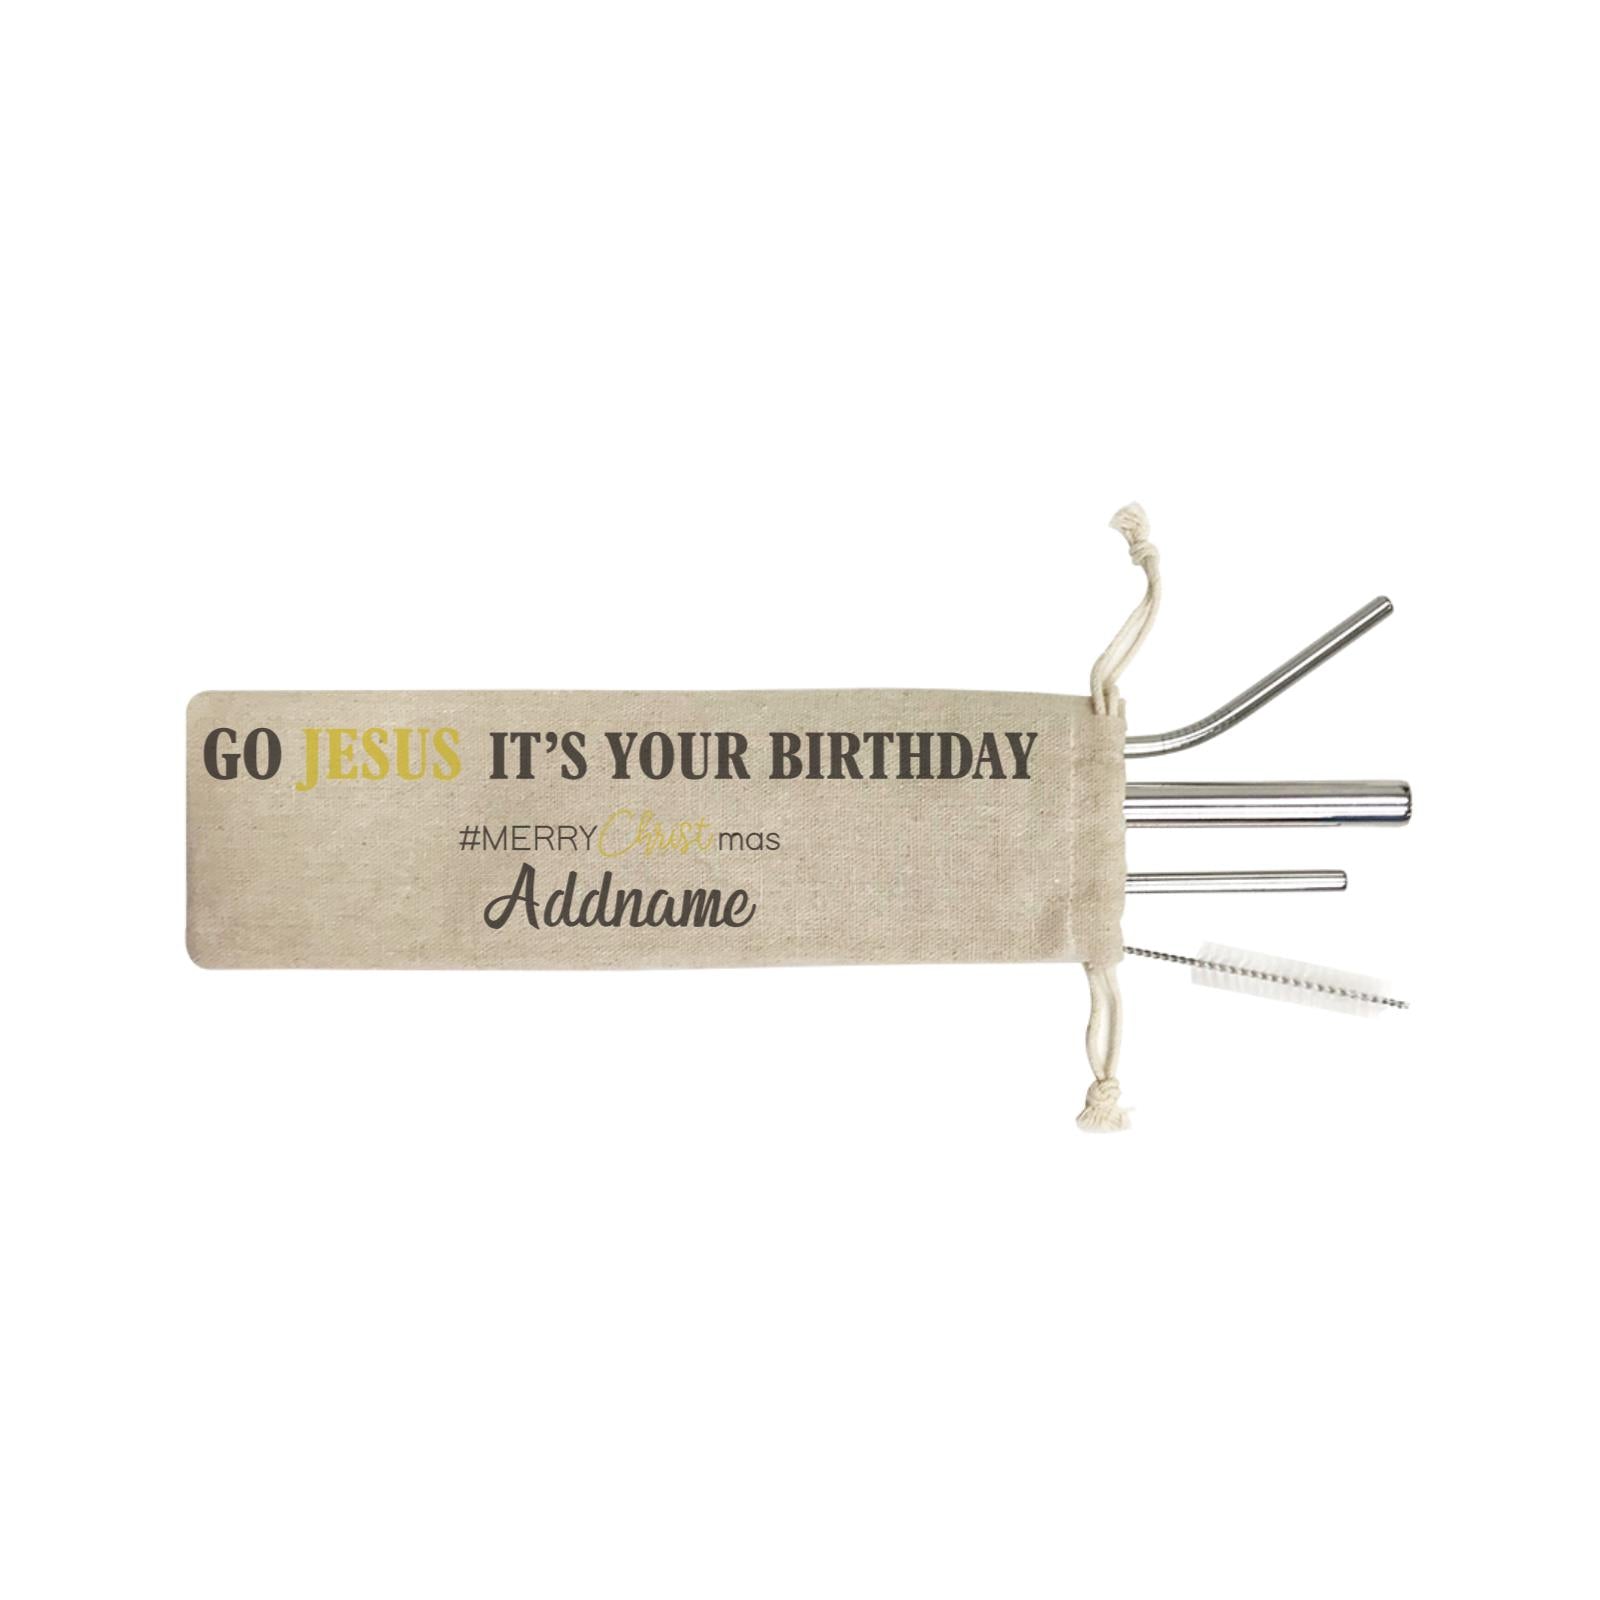 Xmas Go Jesus It's Your Birthday SB 4-in-1 Stainless Steel Straw Set In a Satchel